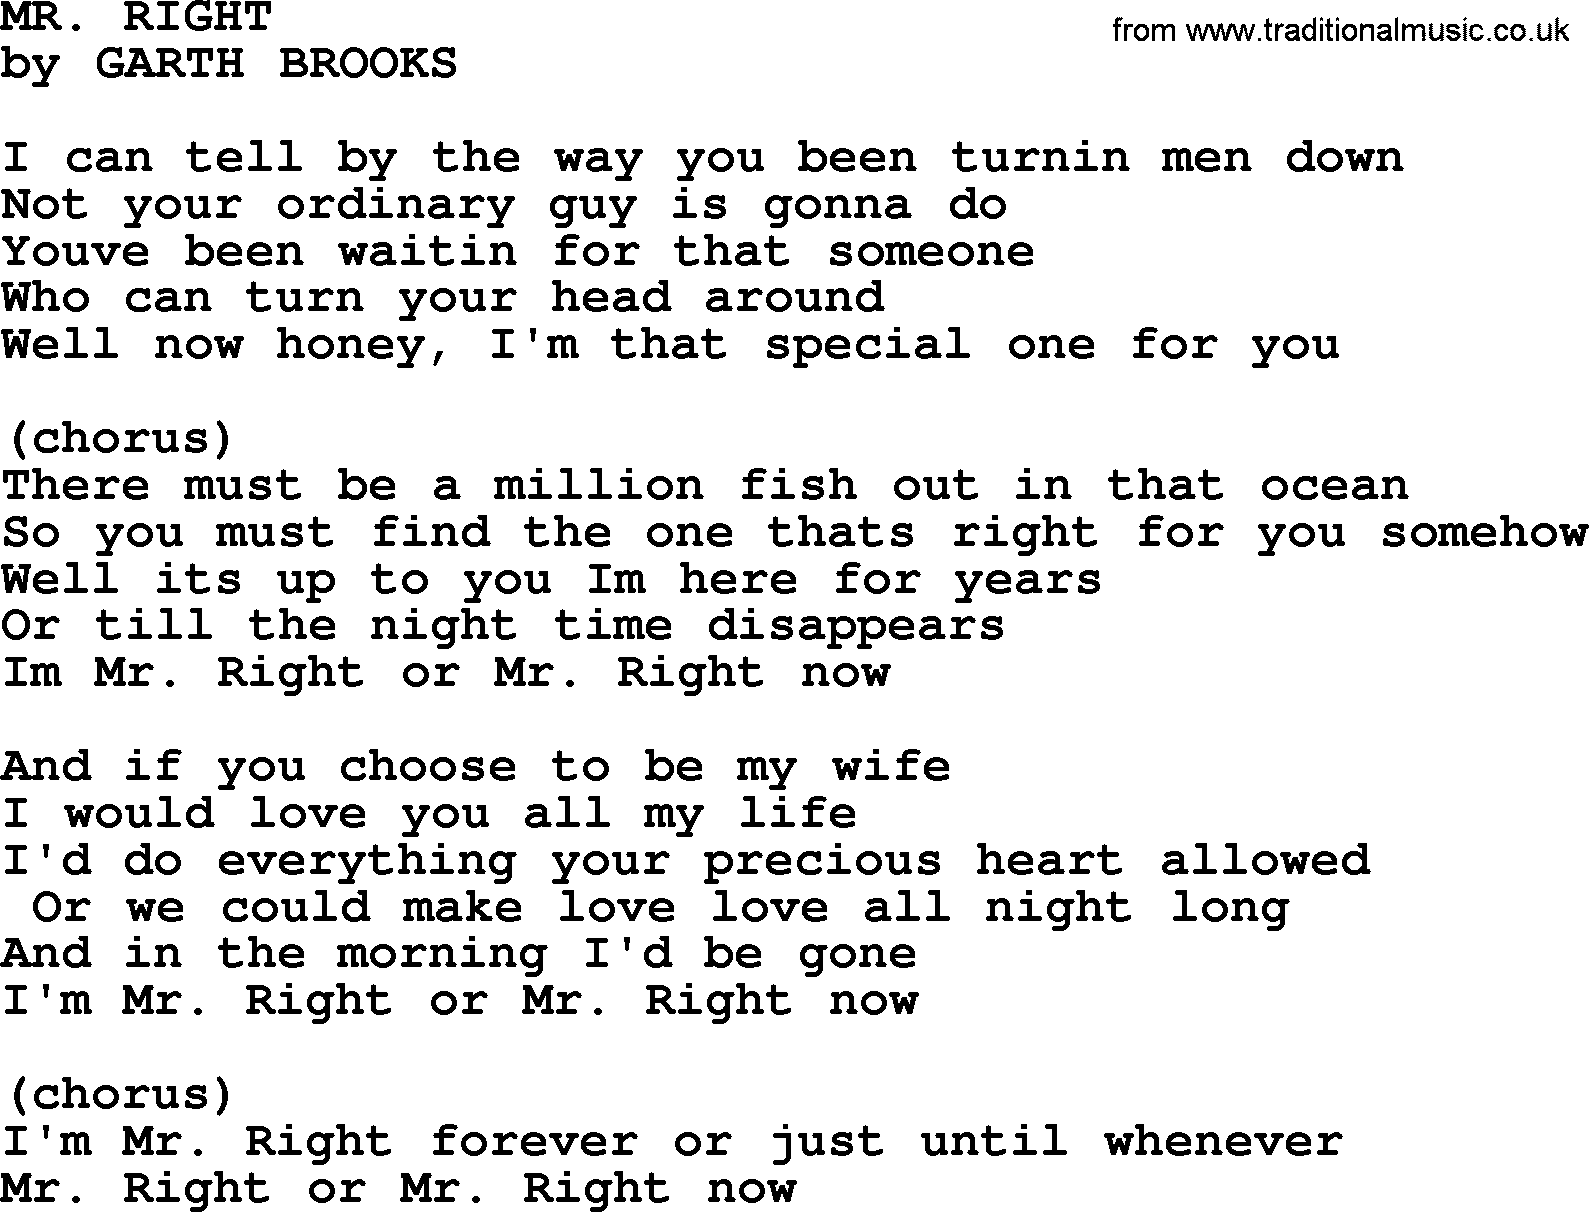 Garth Brooks song: Mr. Right, lyrics